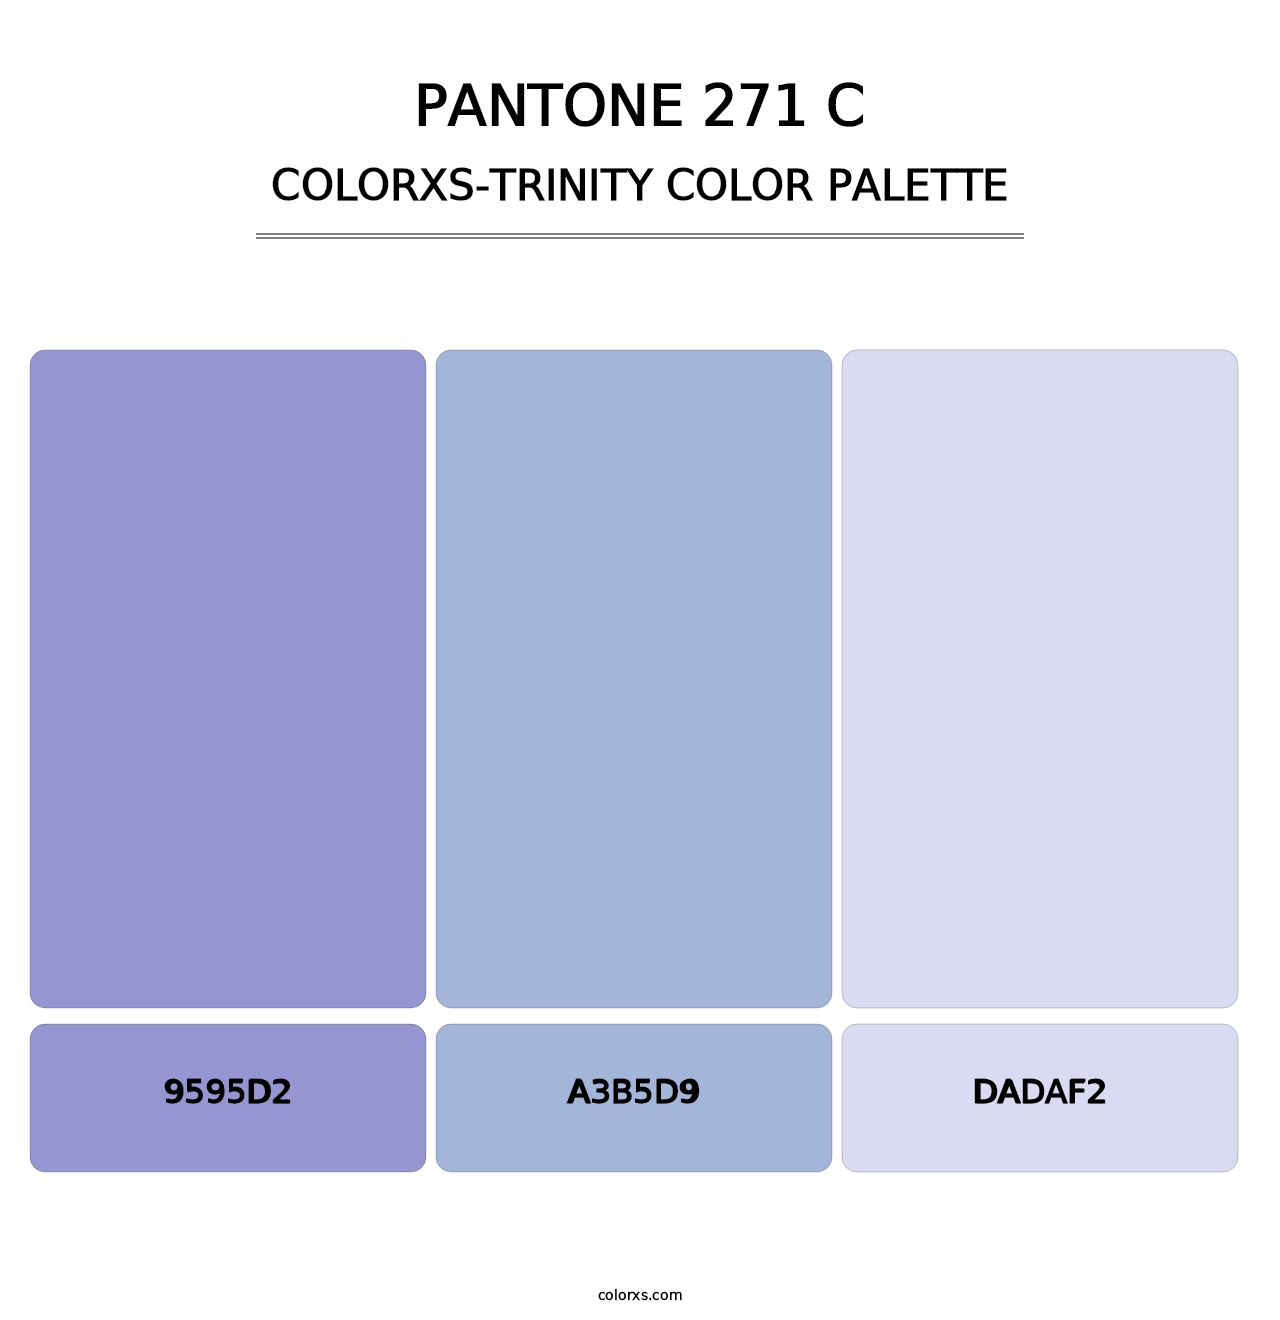 PANTONE 271 C - Colorxs Trinity Palette